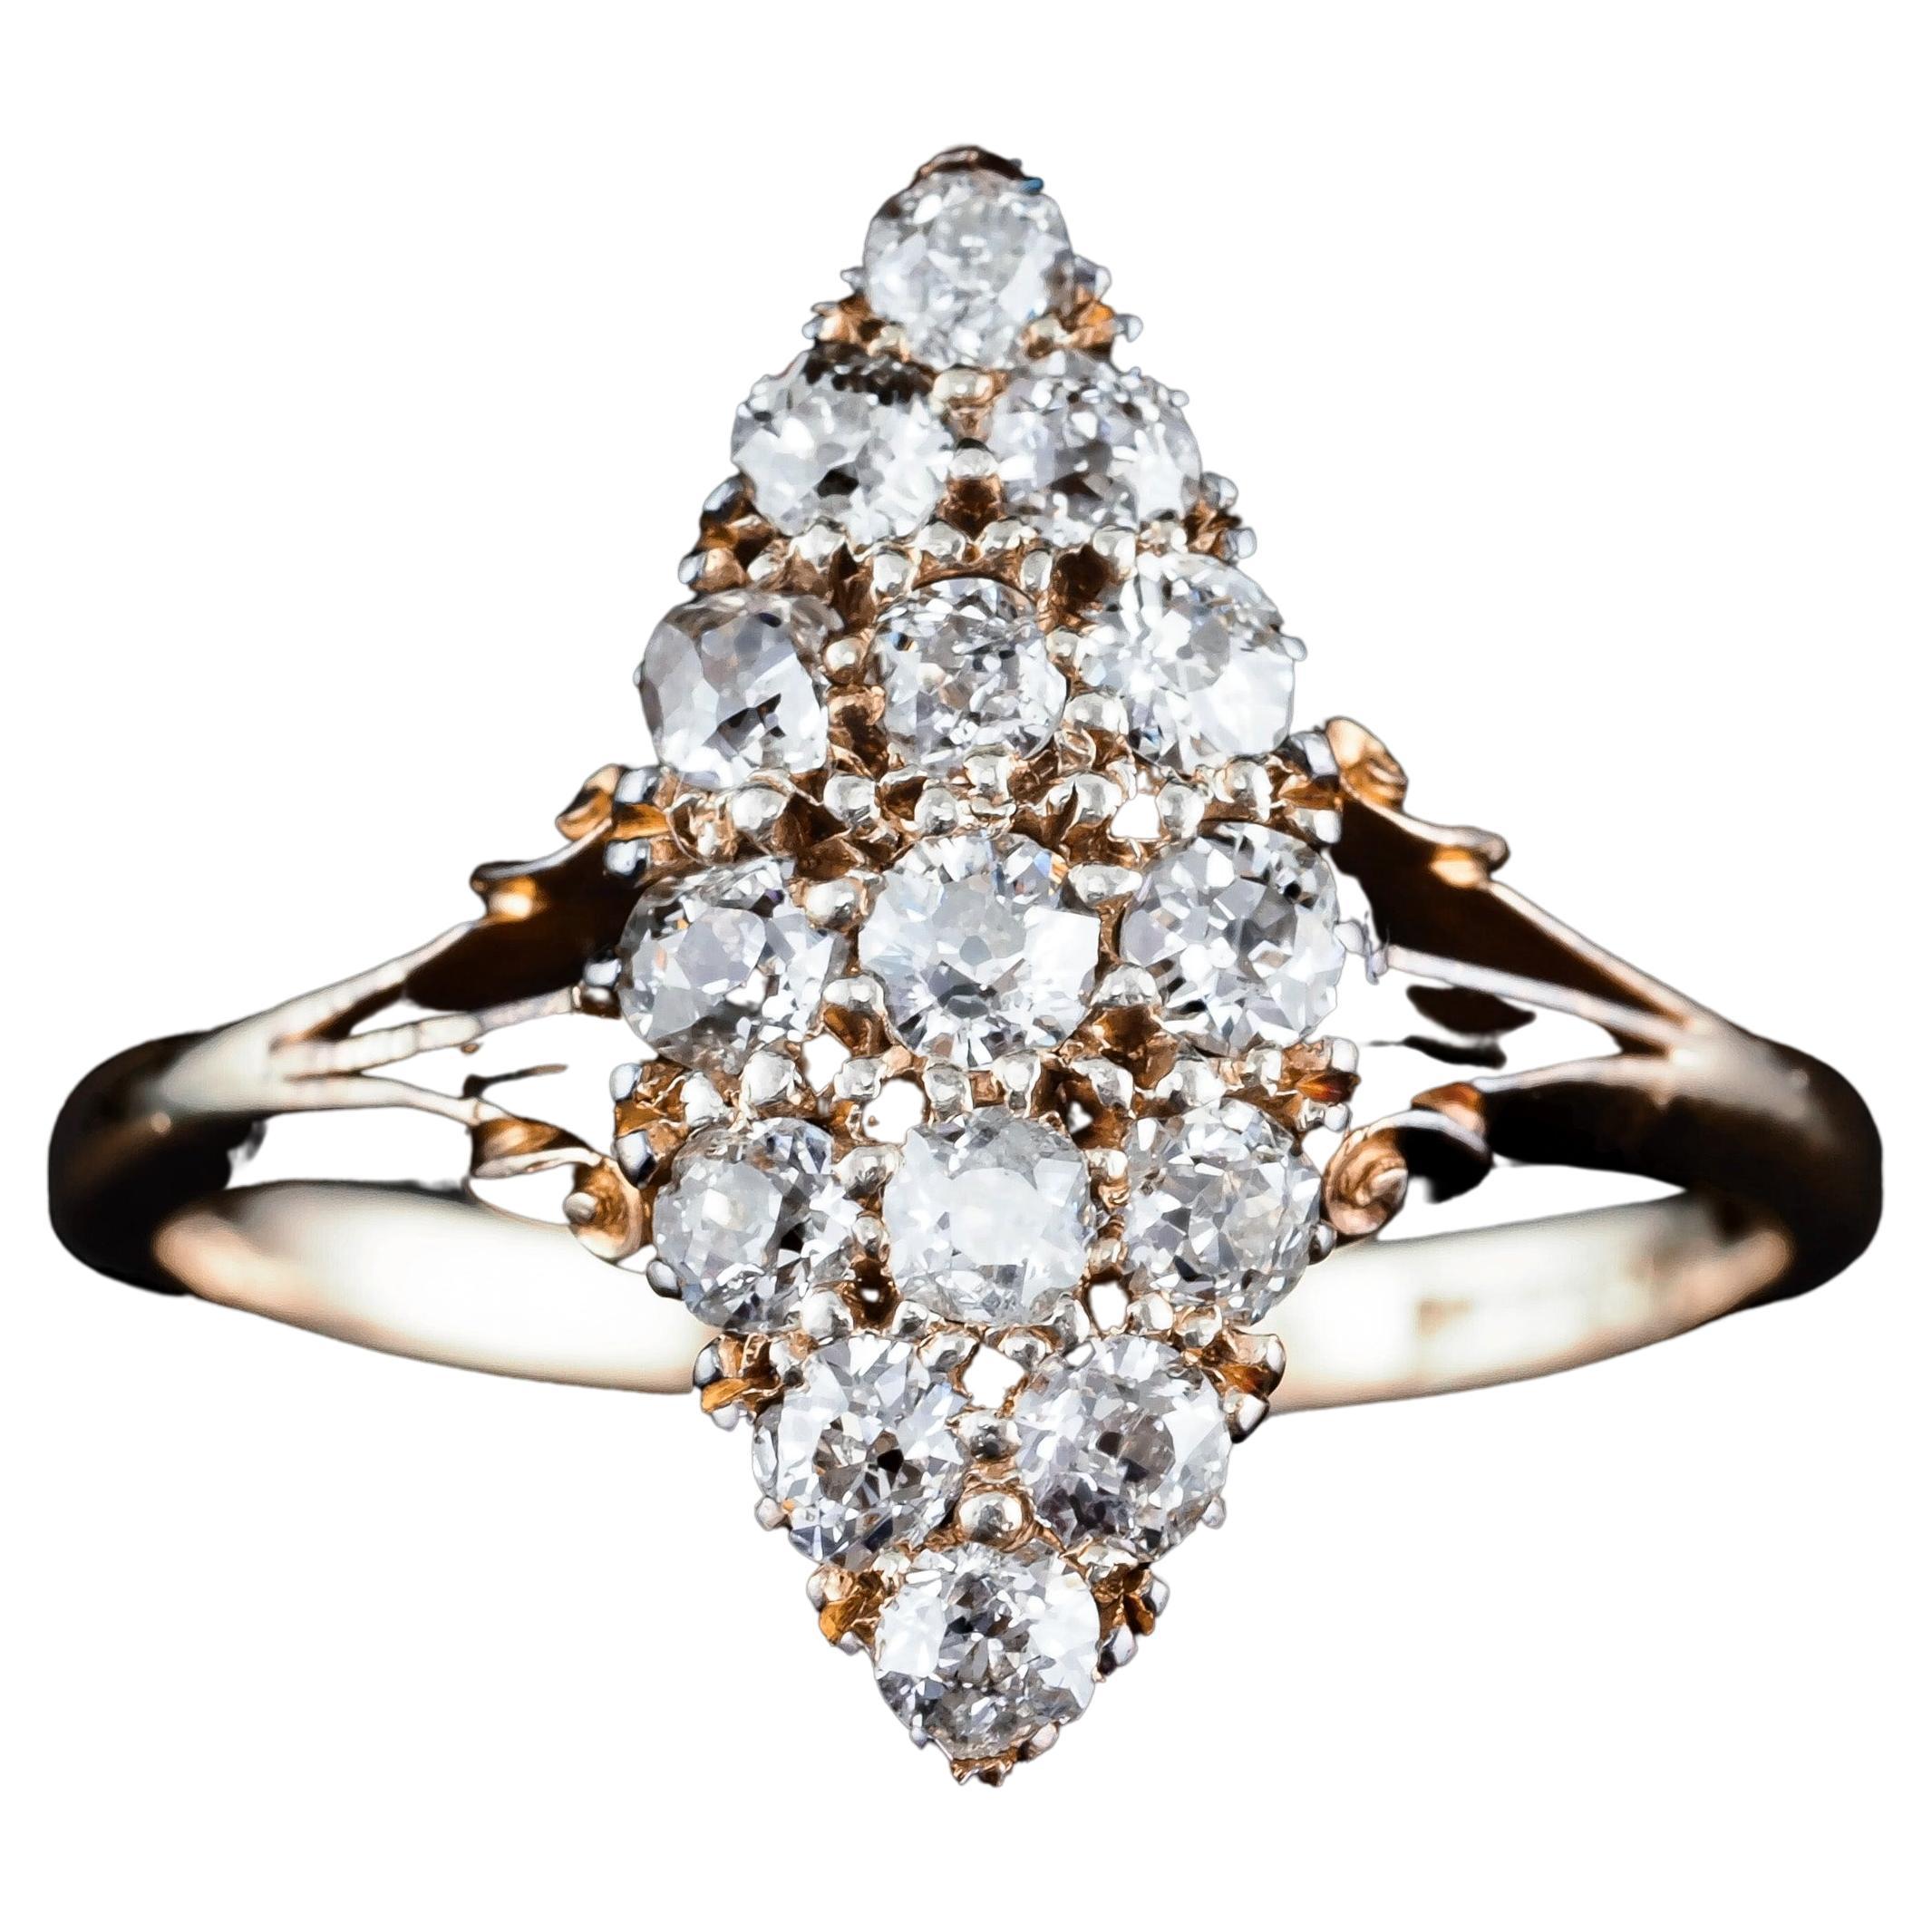 Antique Diamond Ring 18K Gold Navette/Cluster Design - c.1900s For Sale